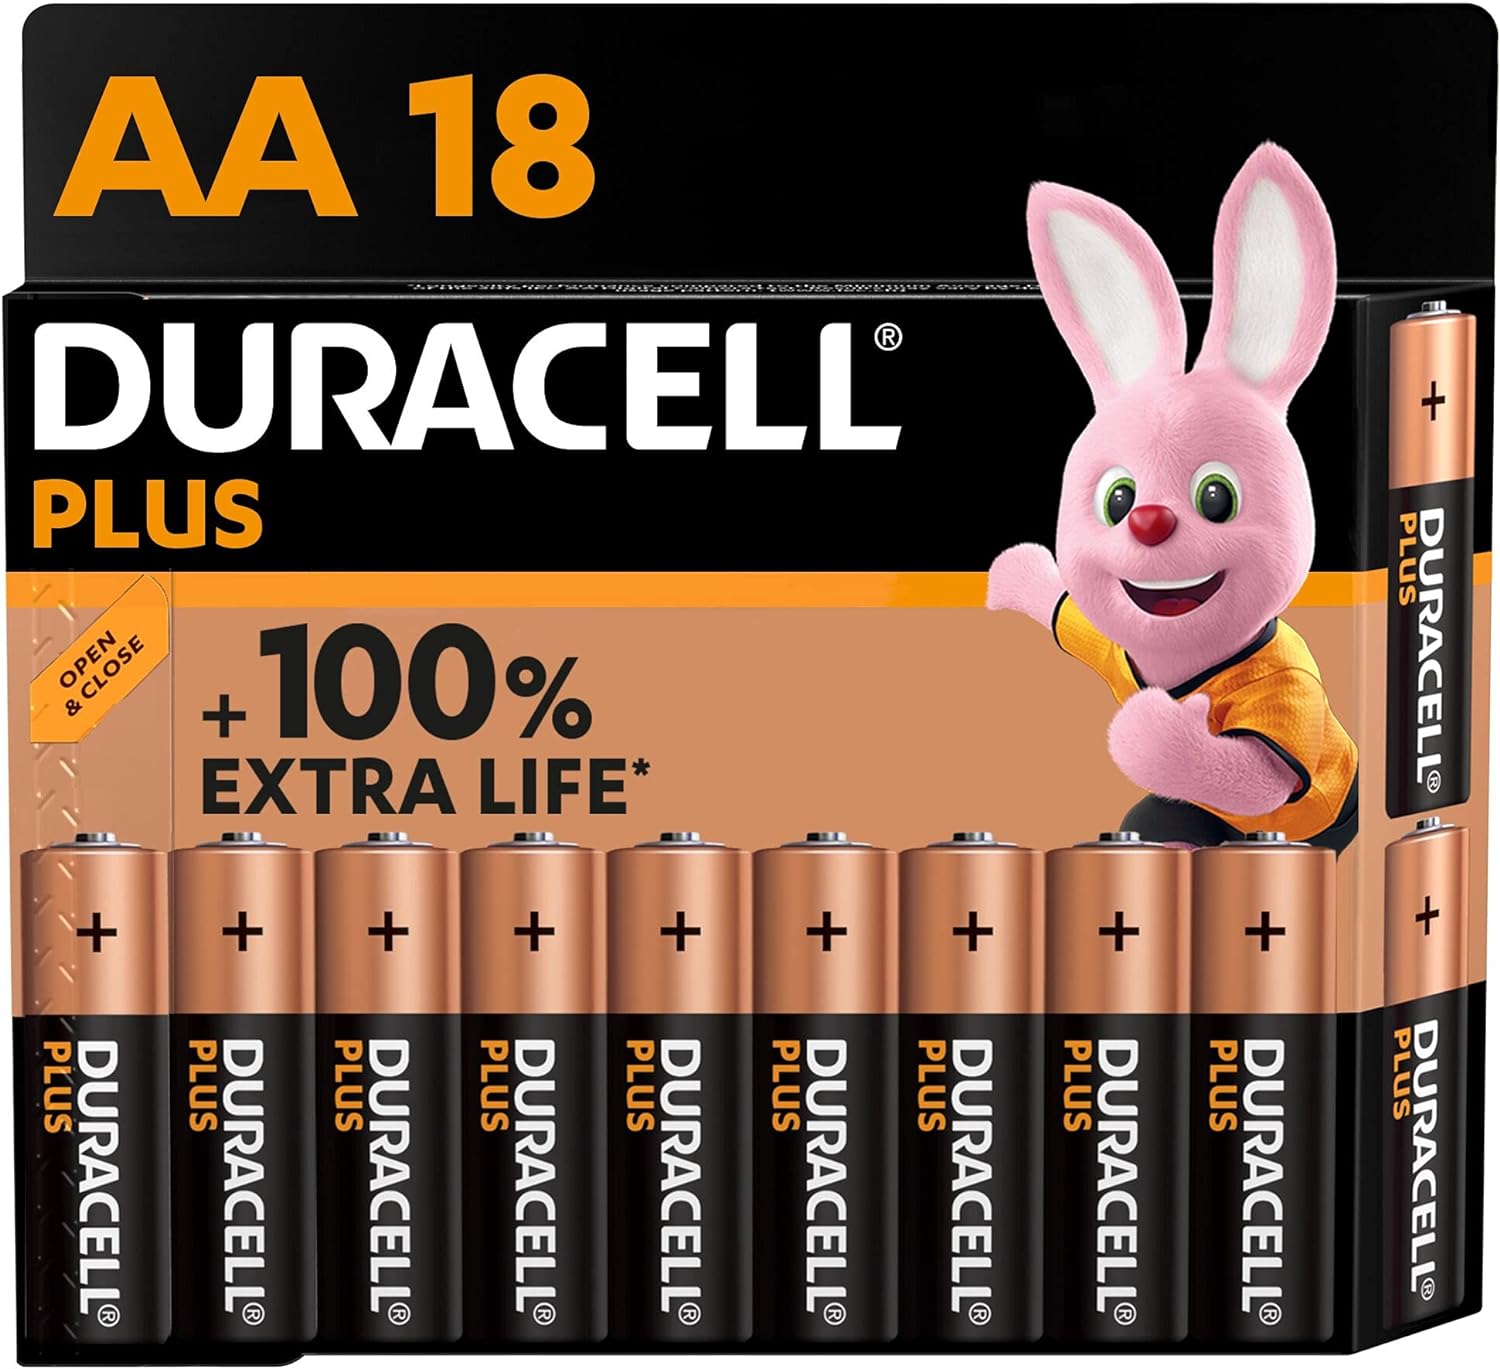 Duracell Plus AA Alkaline Batteries - Pack of 18